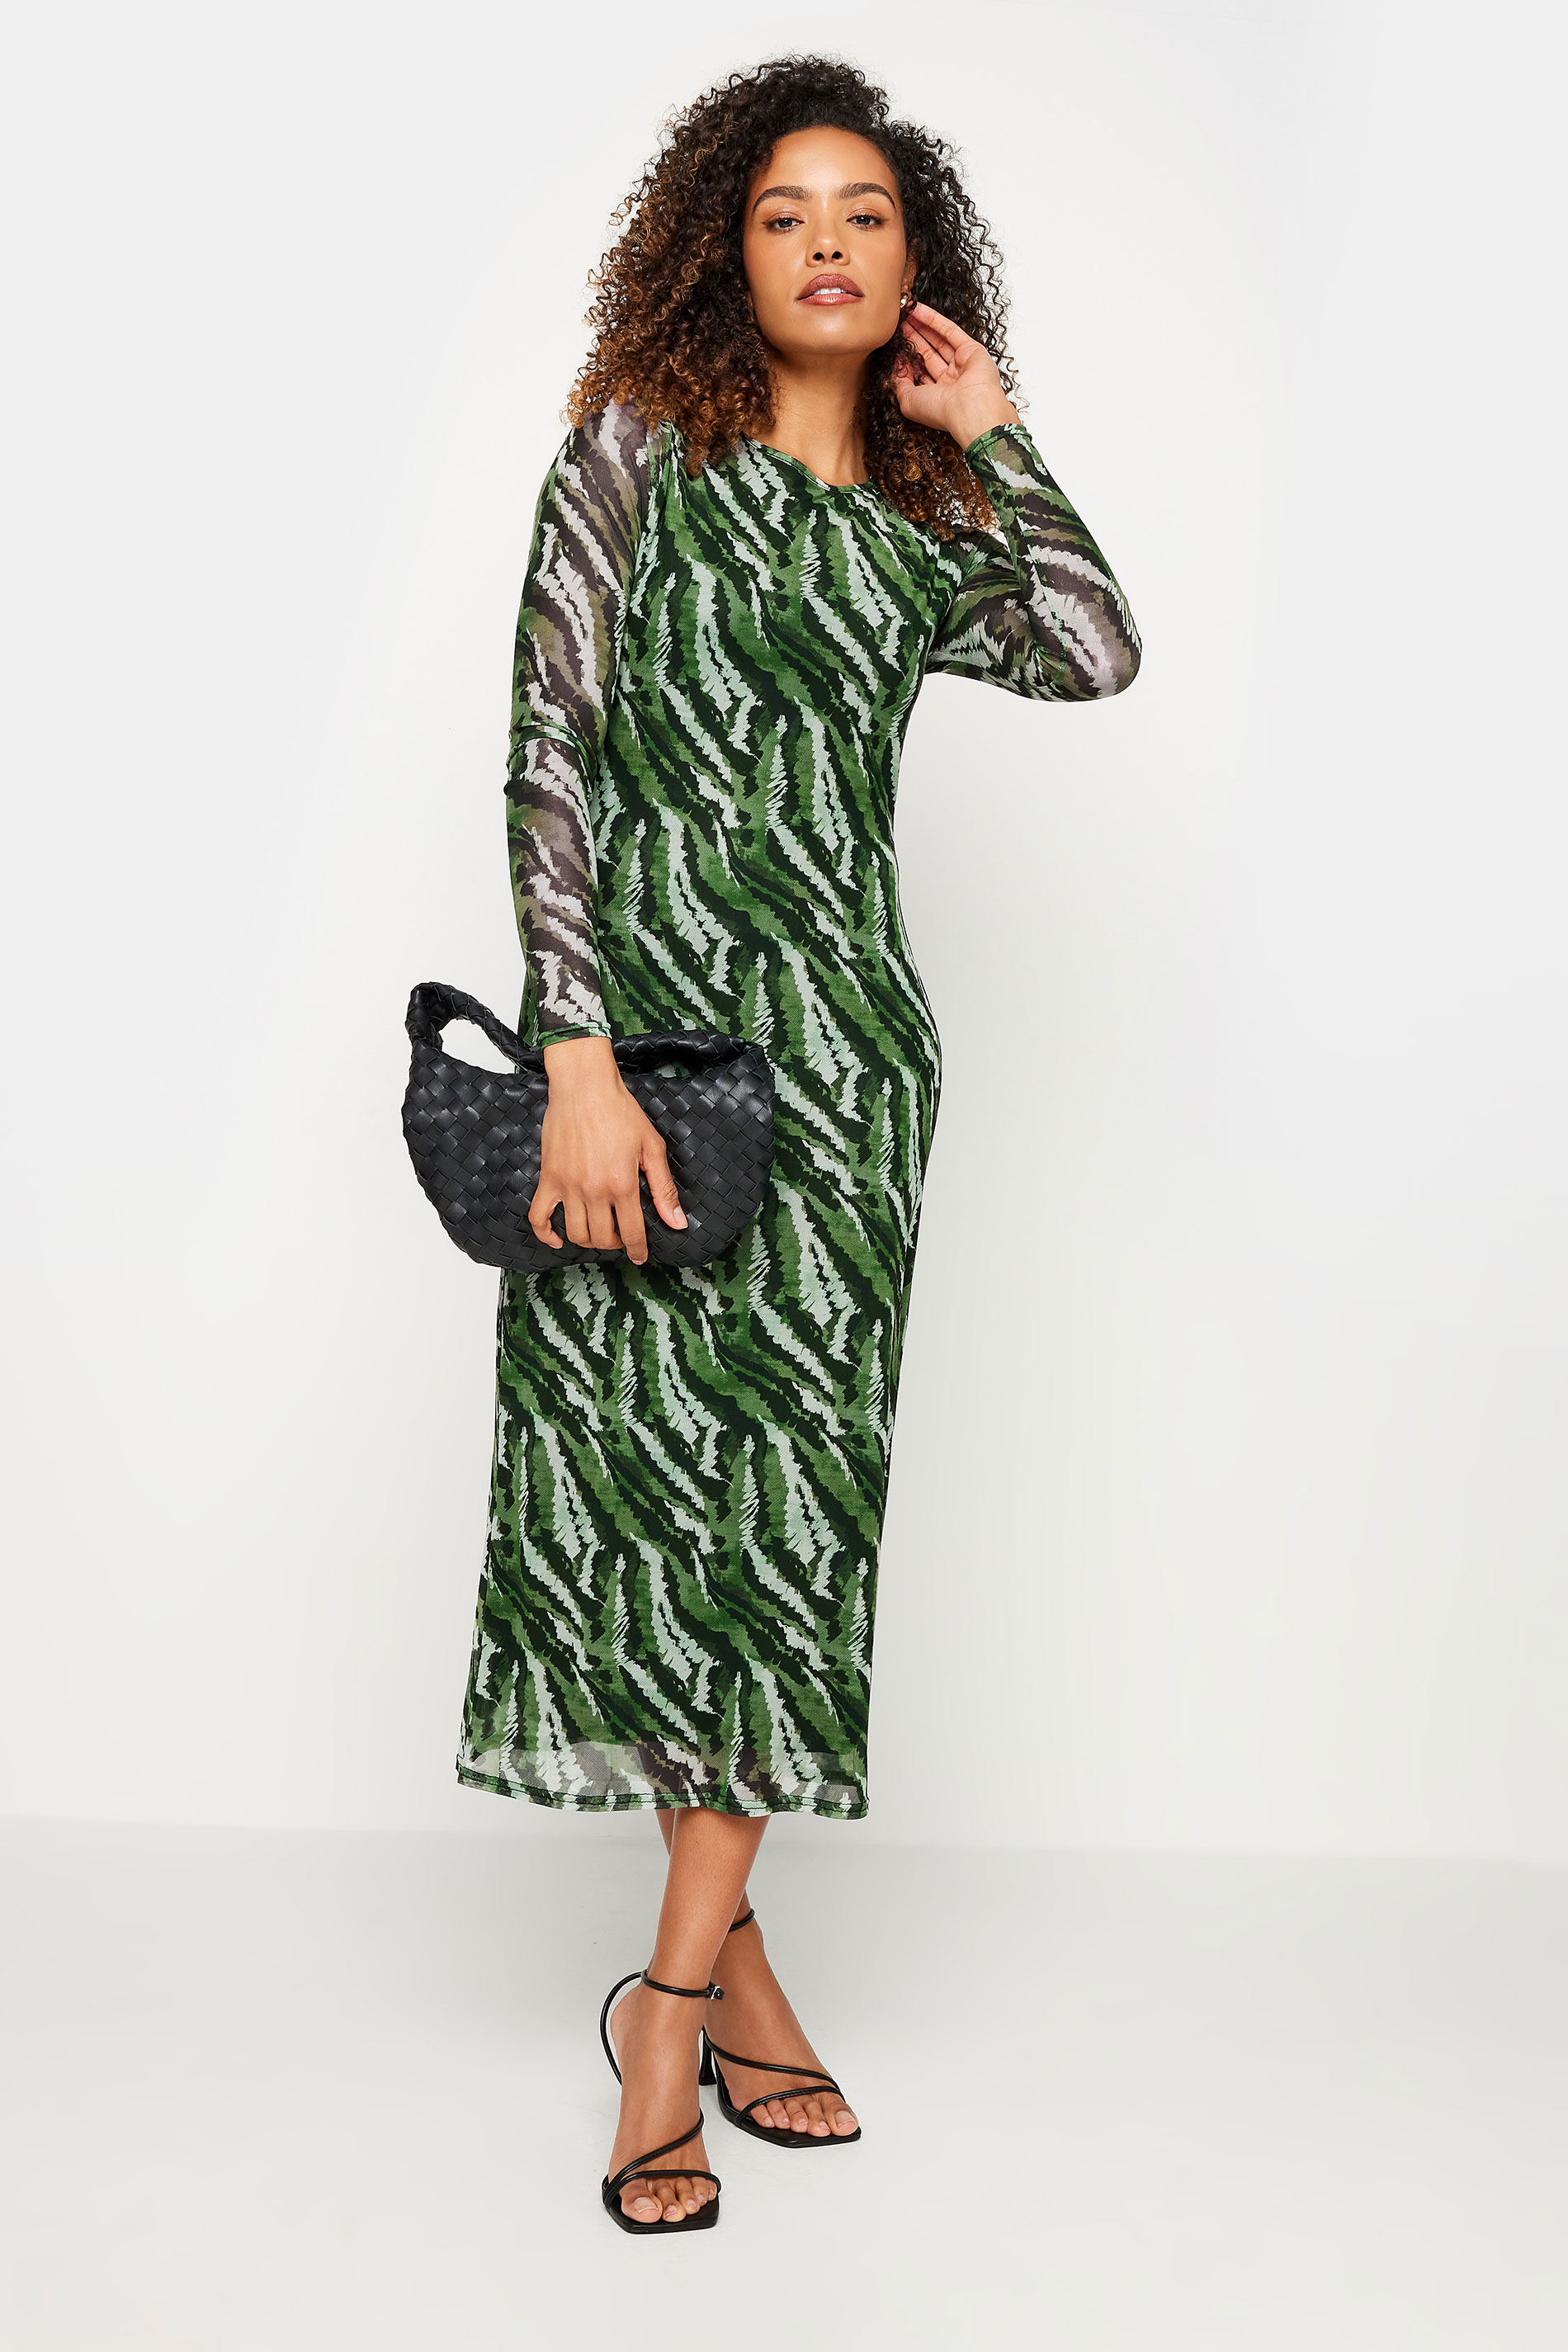 M&Co Khaki Green Animal Print Mesh Long Sleeve Dress  | M&Co 1